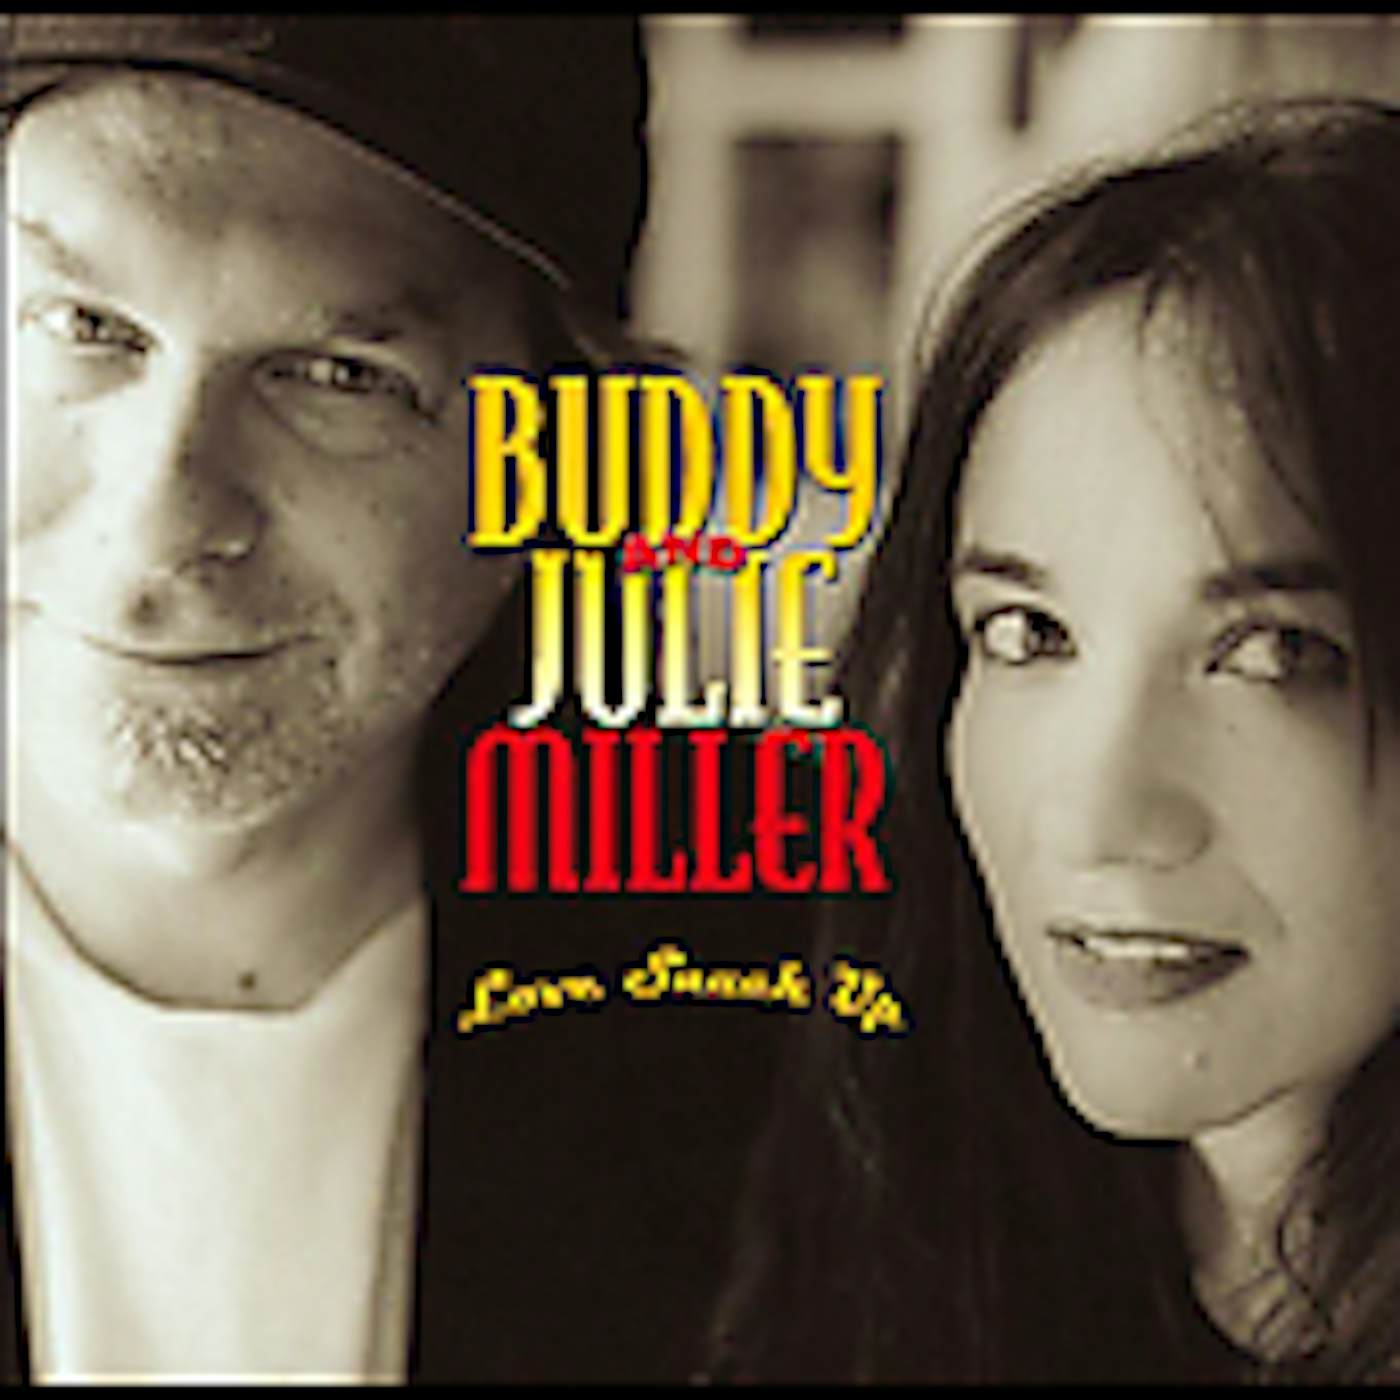 Buddy & Julie Miller LOVE SNUCK UP CD